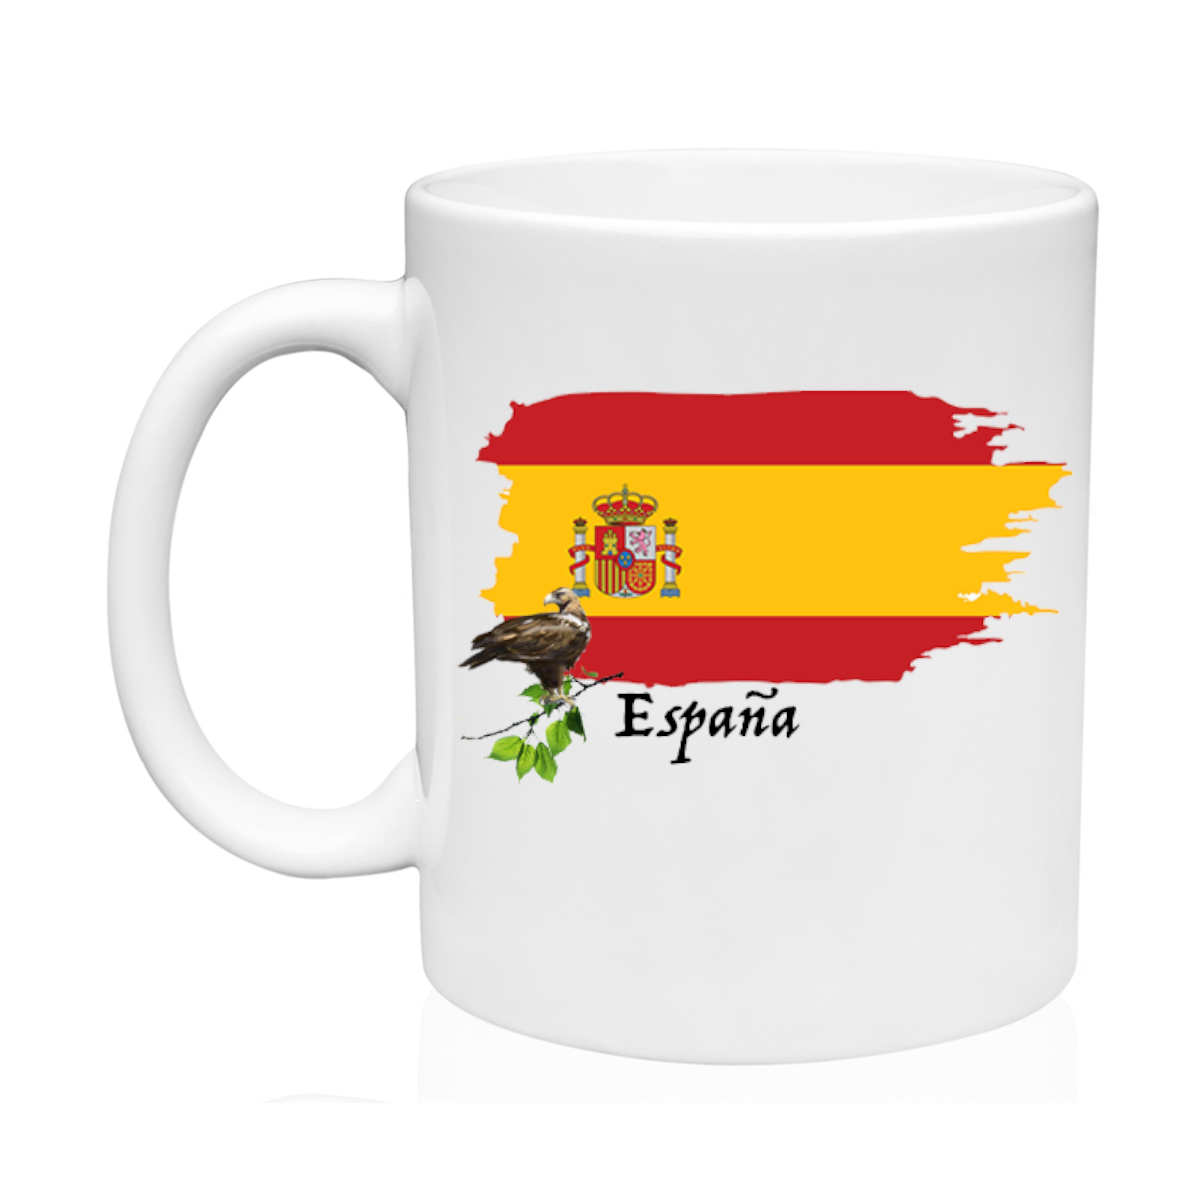 AGAD Turista (I Love España Ceramic Mug)